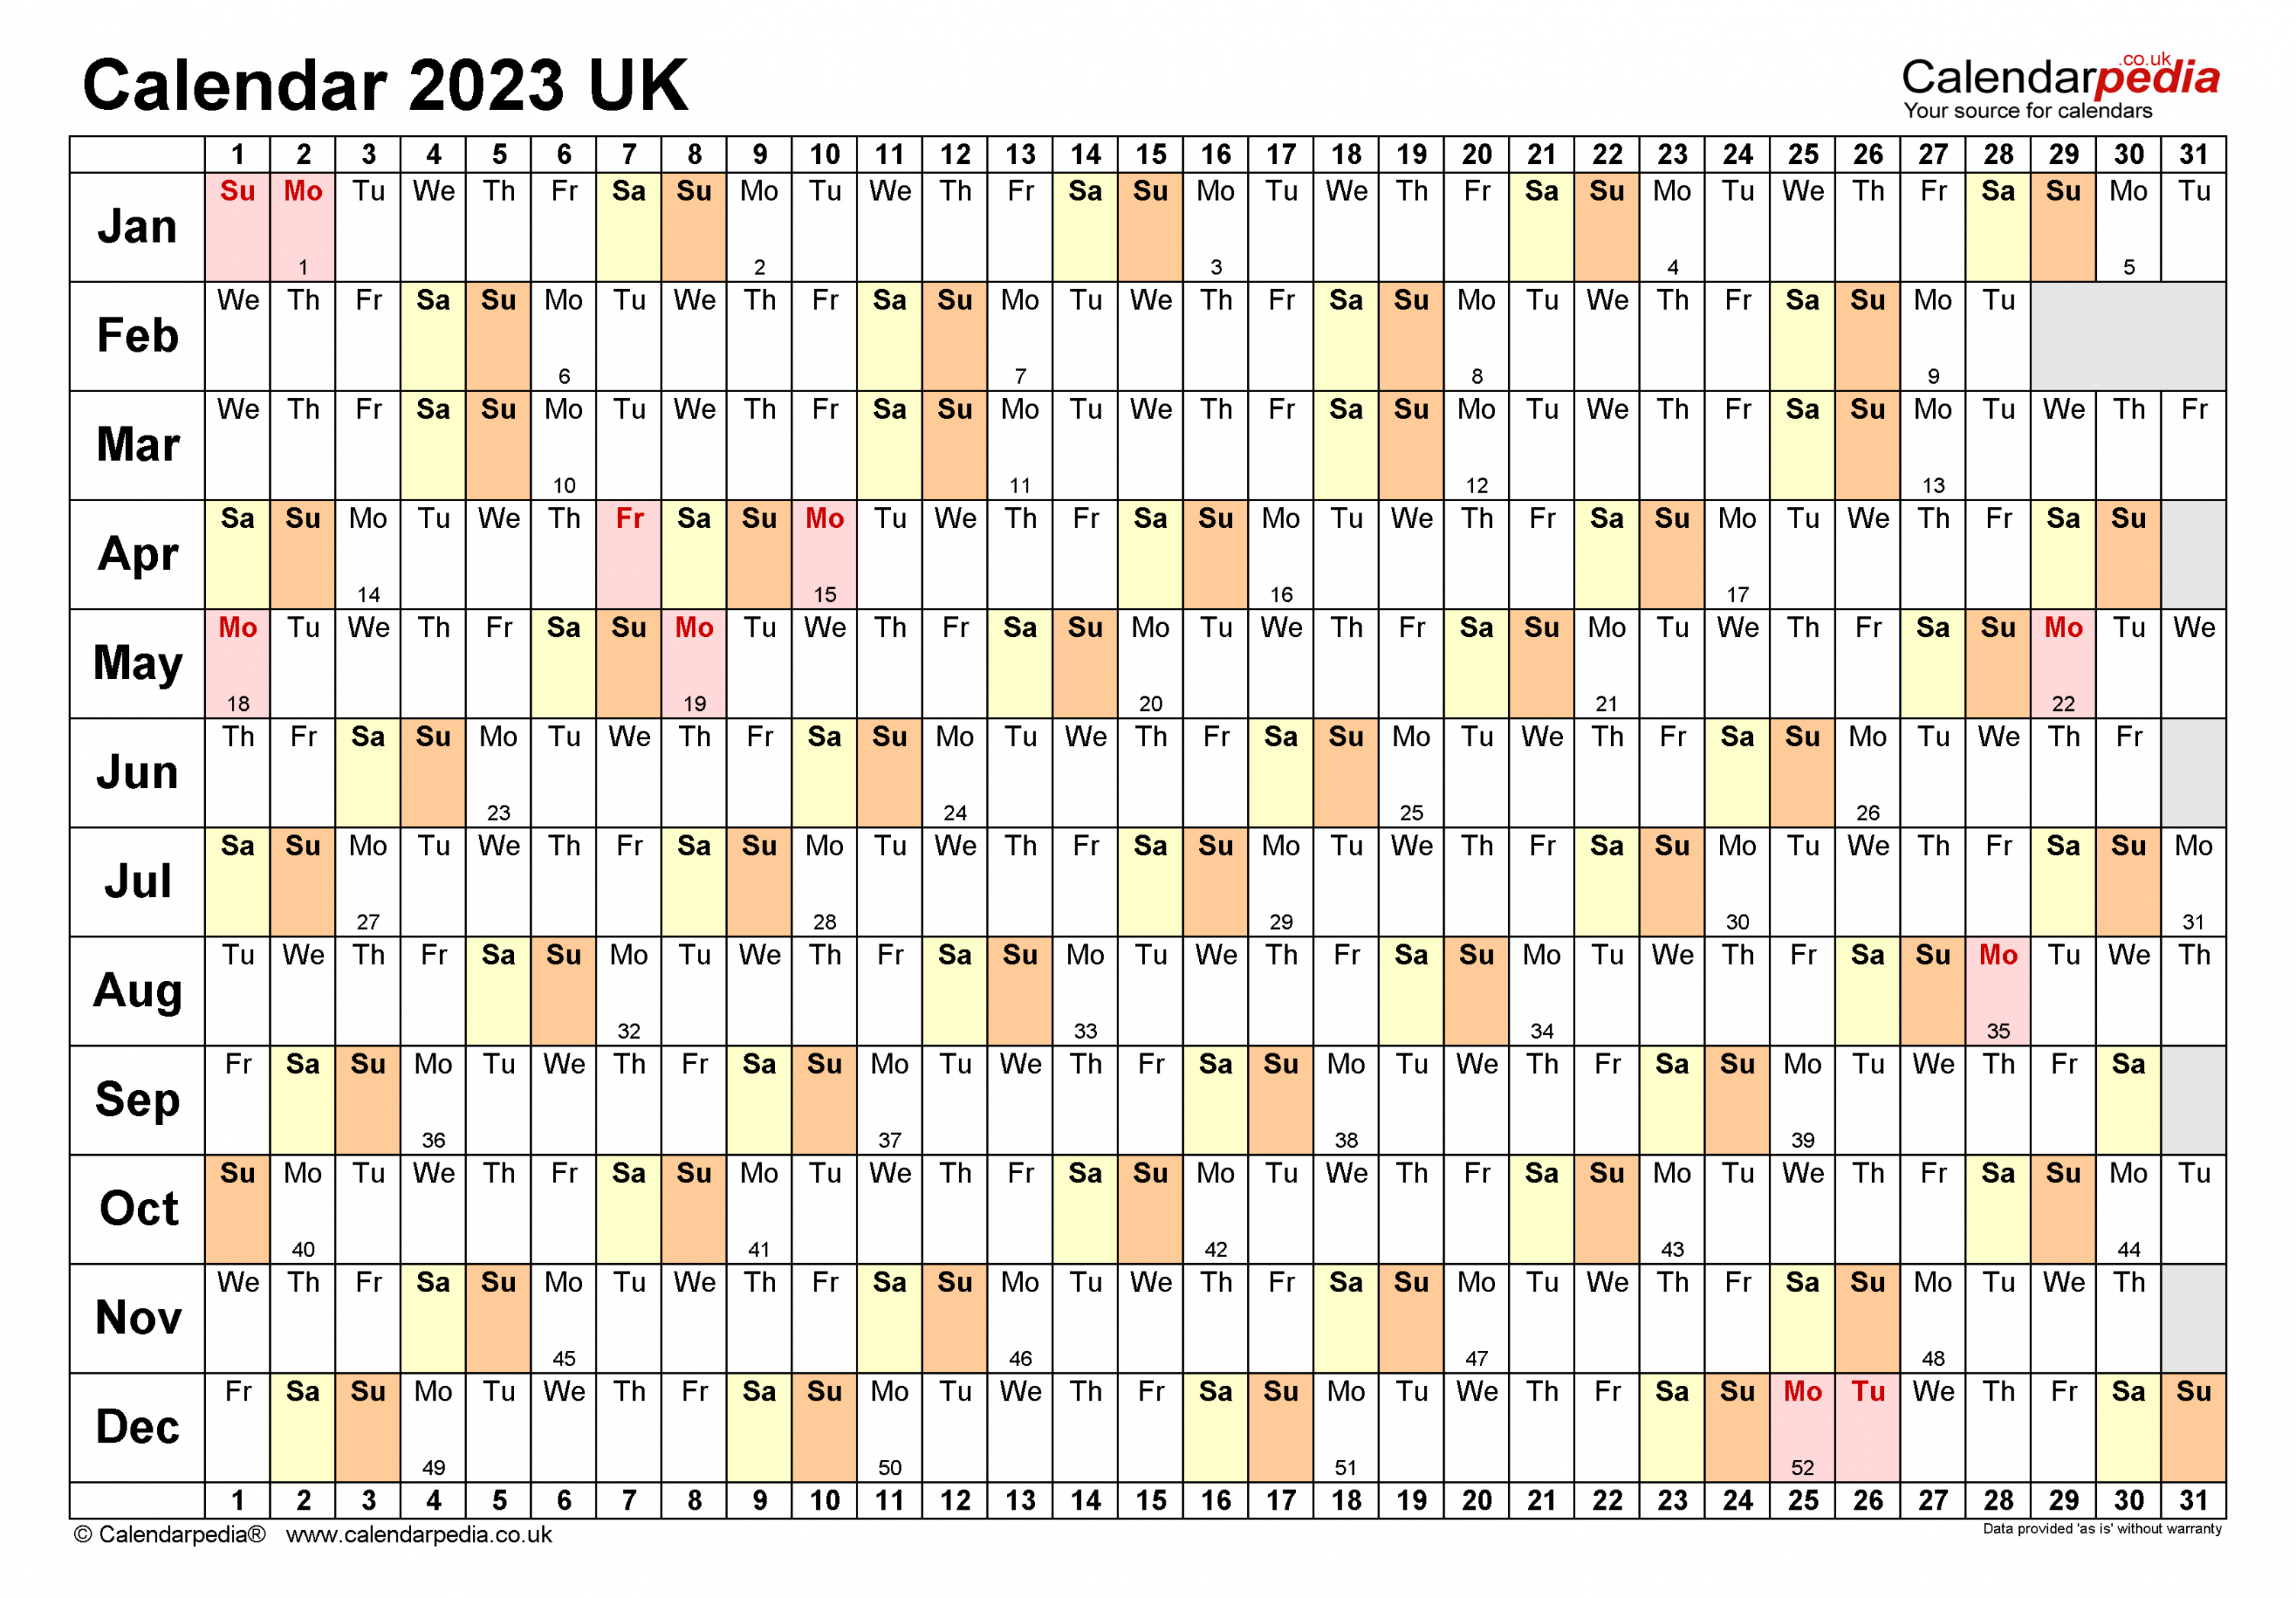 Calendar  (UK) - free printable Microsoft Word templates